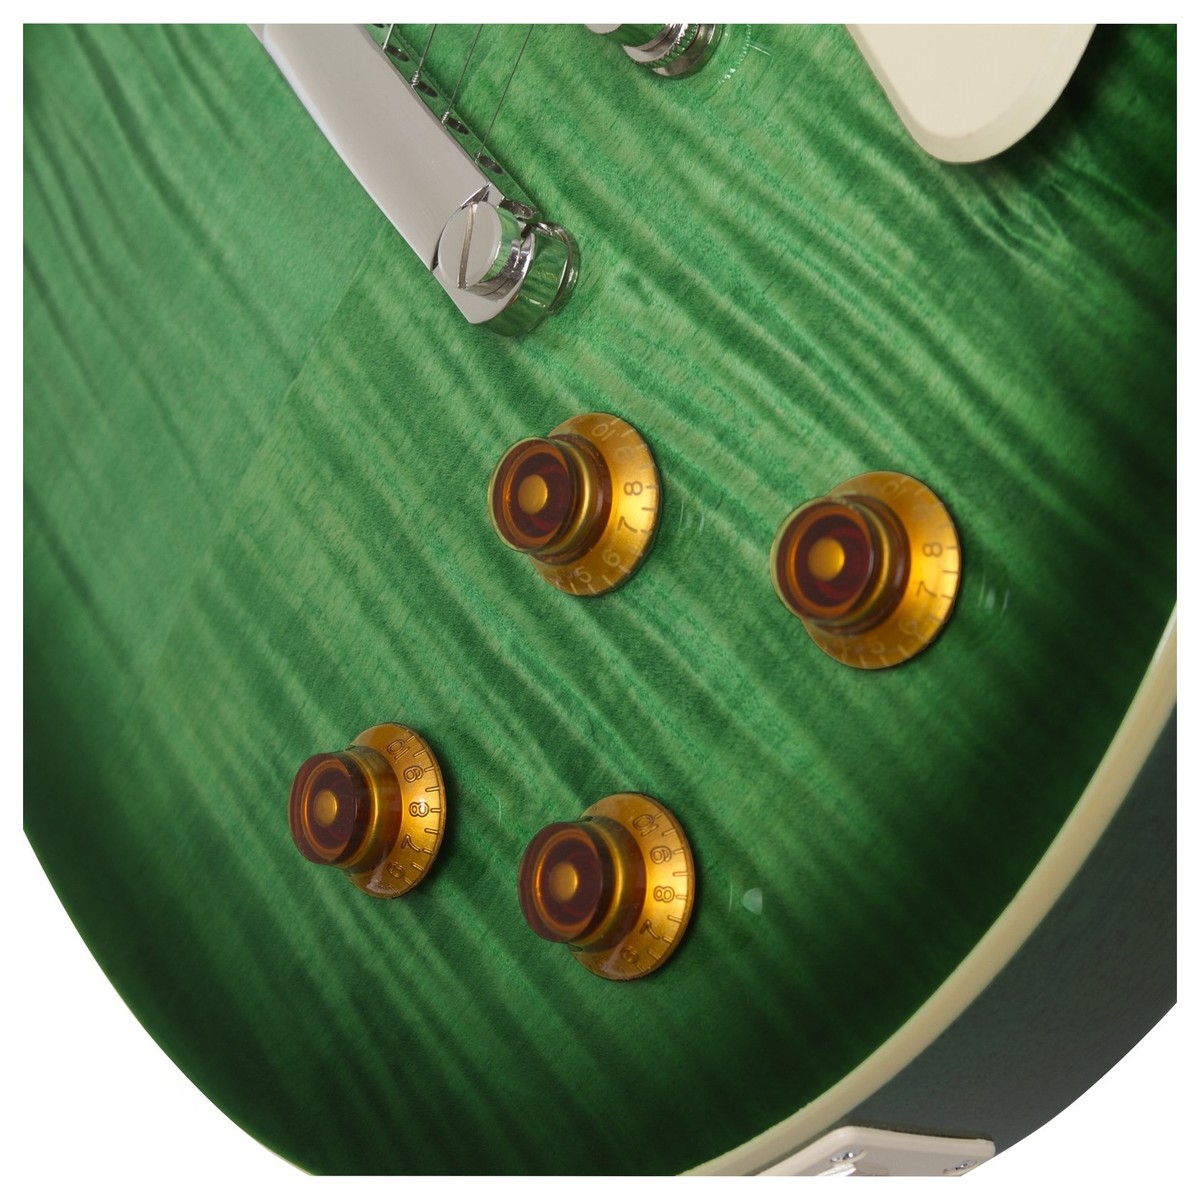 Epiphone Les Paul Standard Plus Top Pro 2018 Hh Ht Pf - Green Burst - Enkel gesneden elektrische gitaar - Variation 4